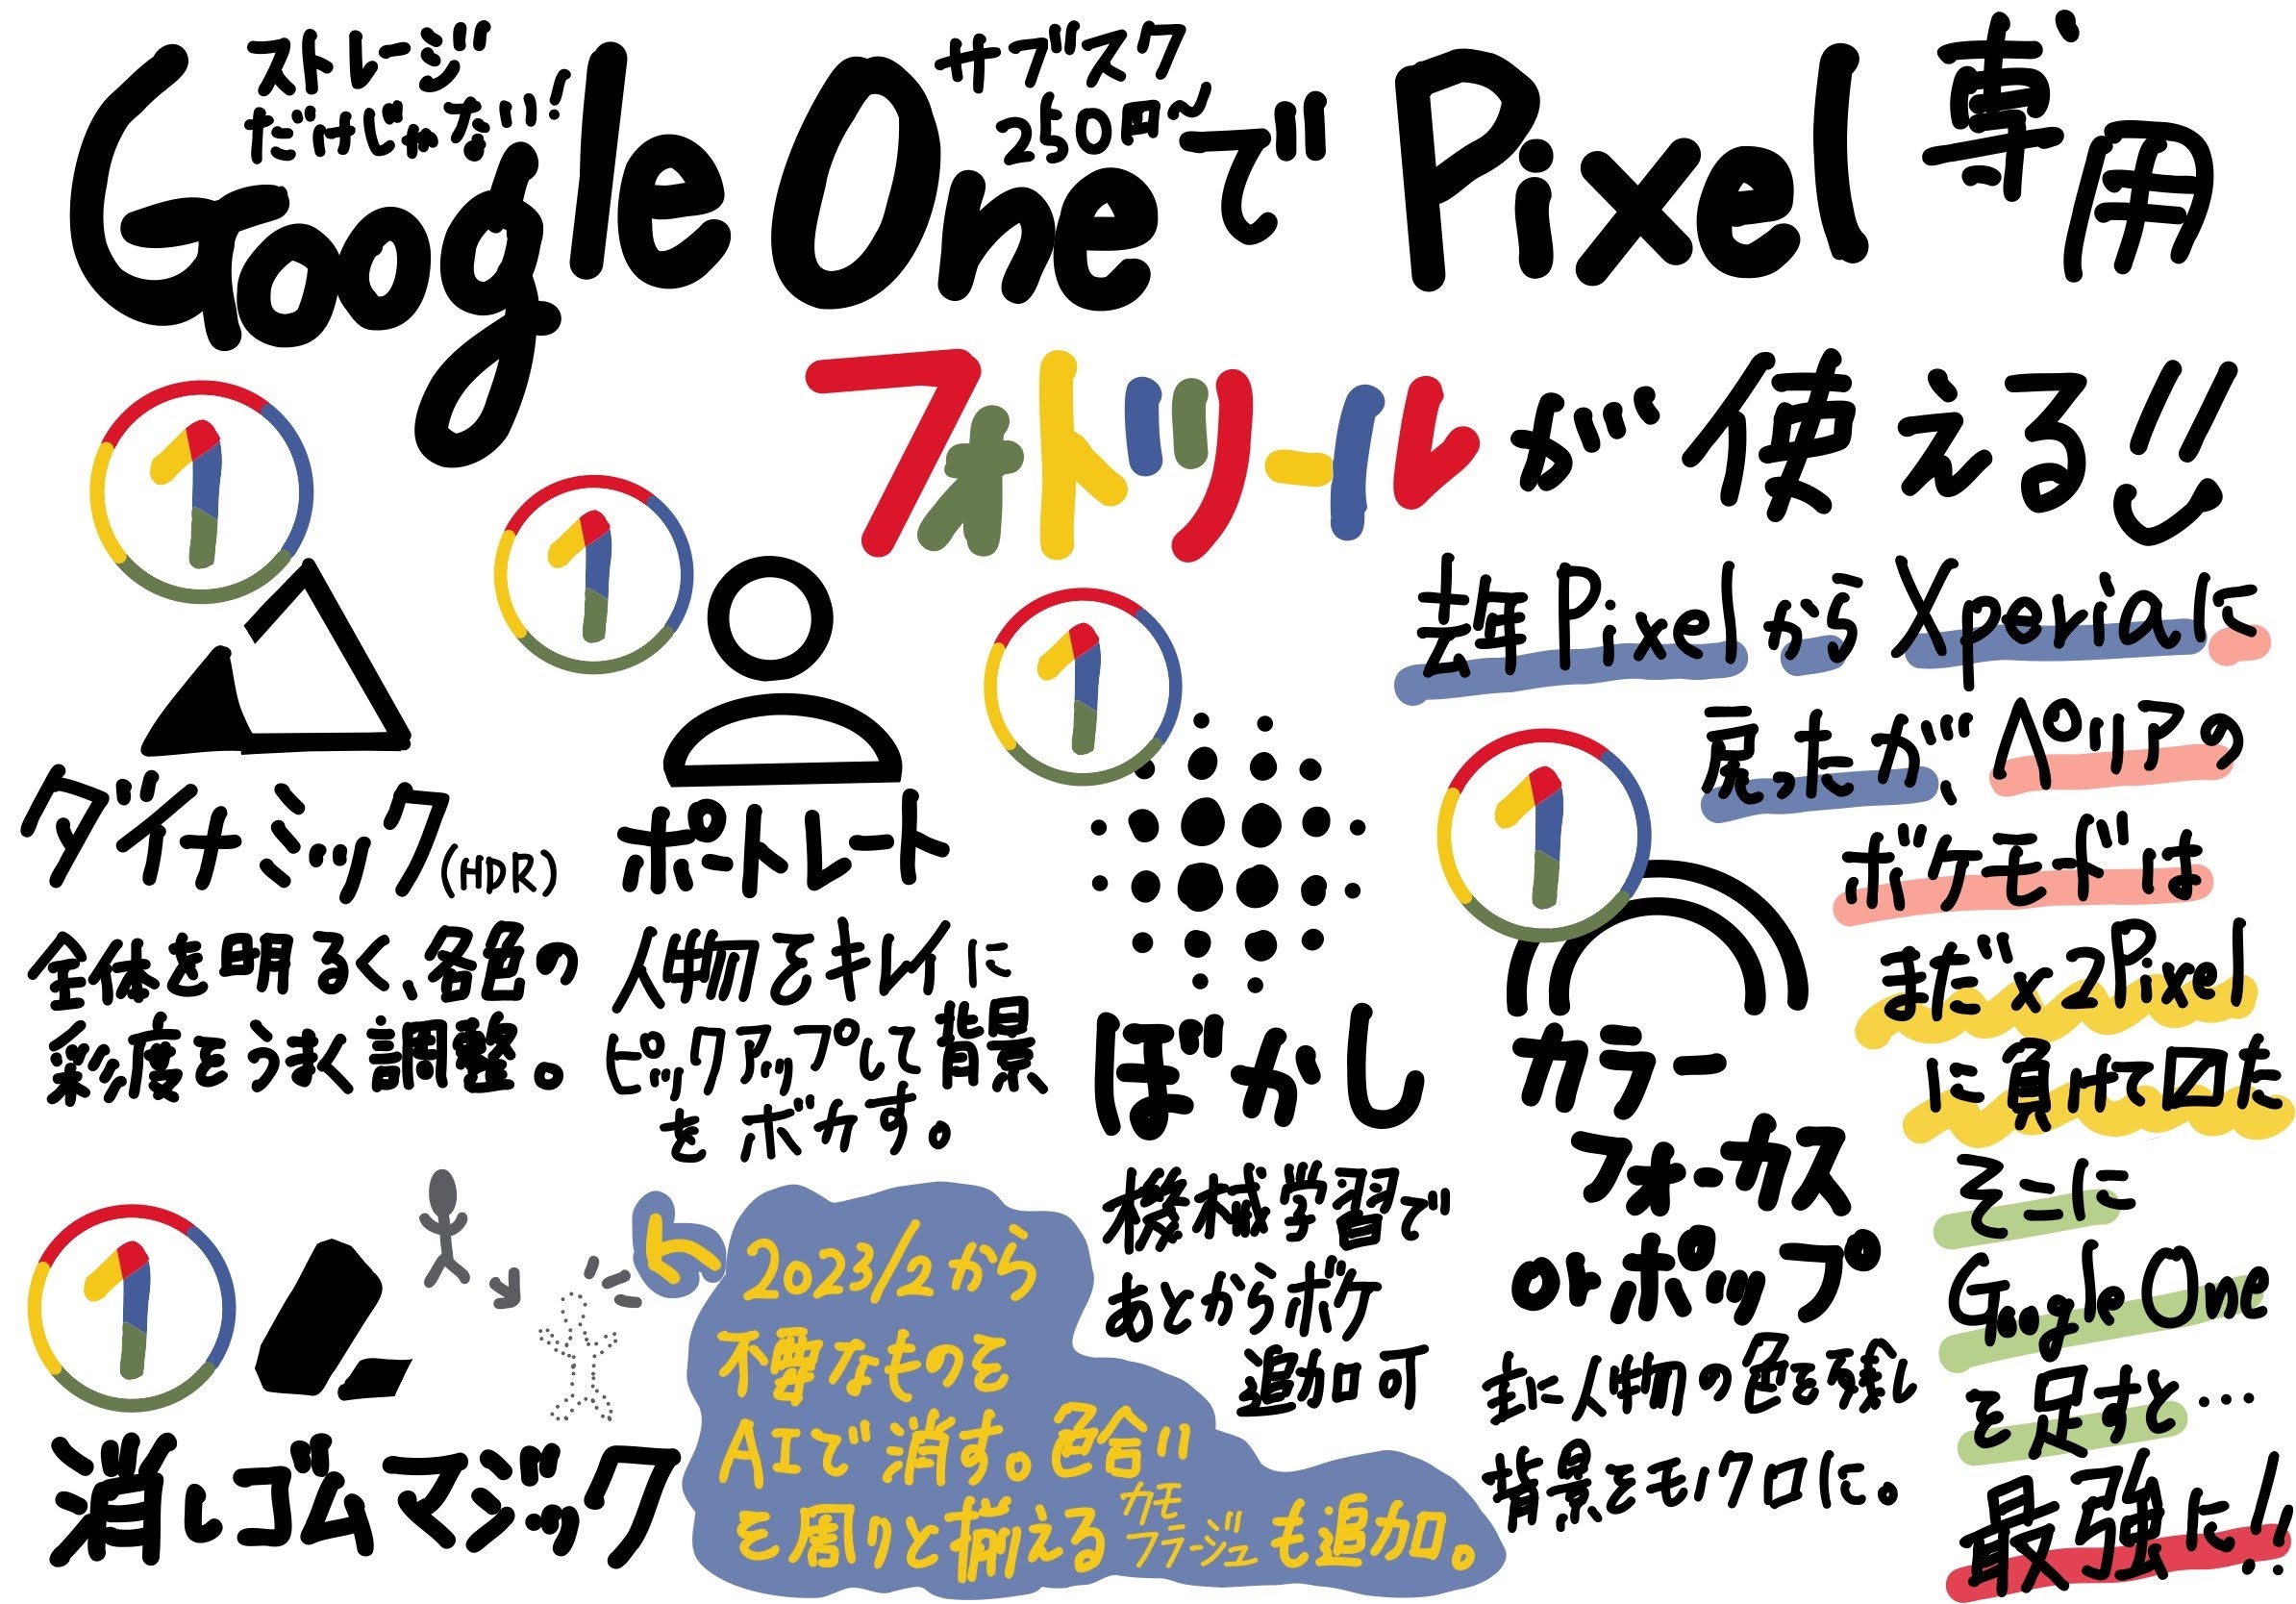 Google One の特典で Pixel 専用のフォトツールを使って Xperia 5 iii を最強にする（言い杉w）